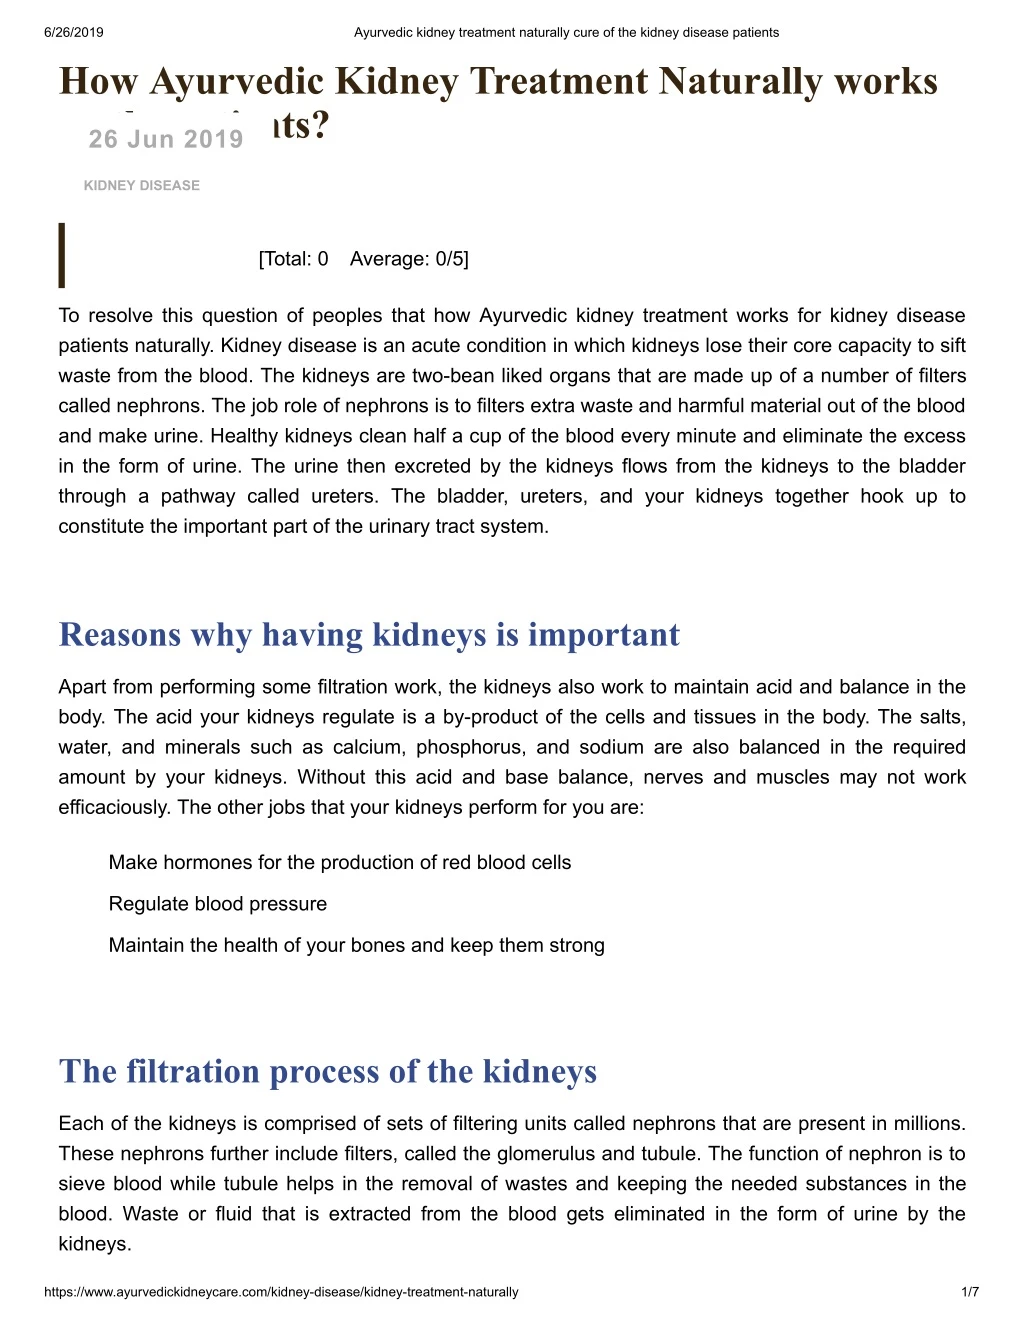 6 26 2019 how ayurvedic kidney treatment